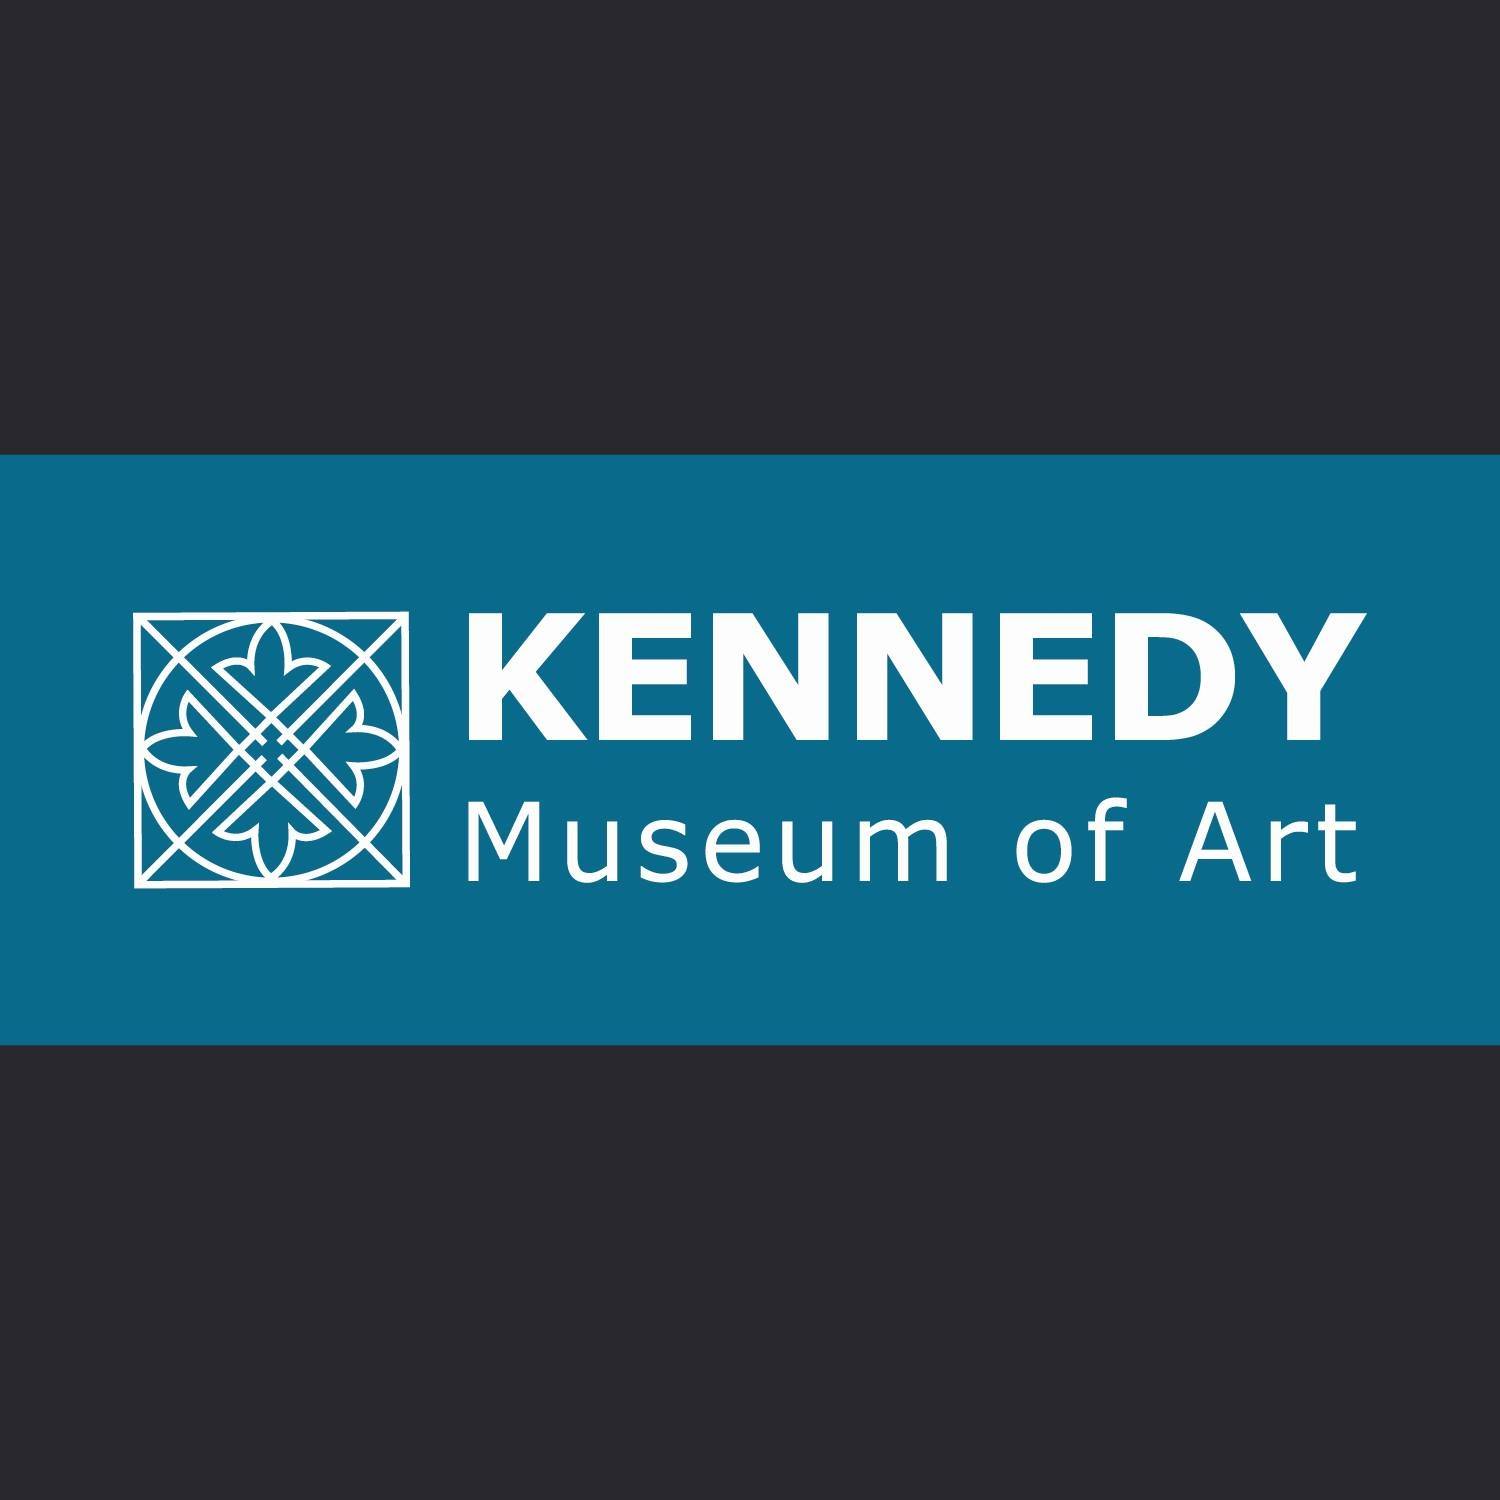 Kennedy Museum of Art|Park|Travel